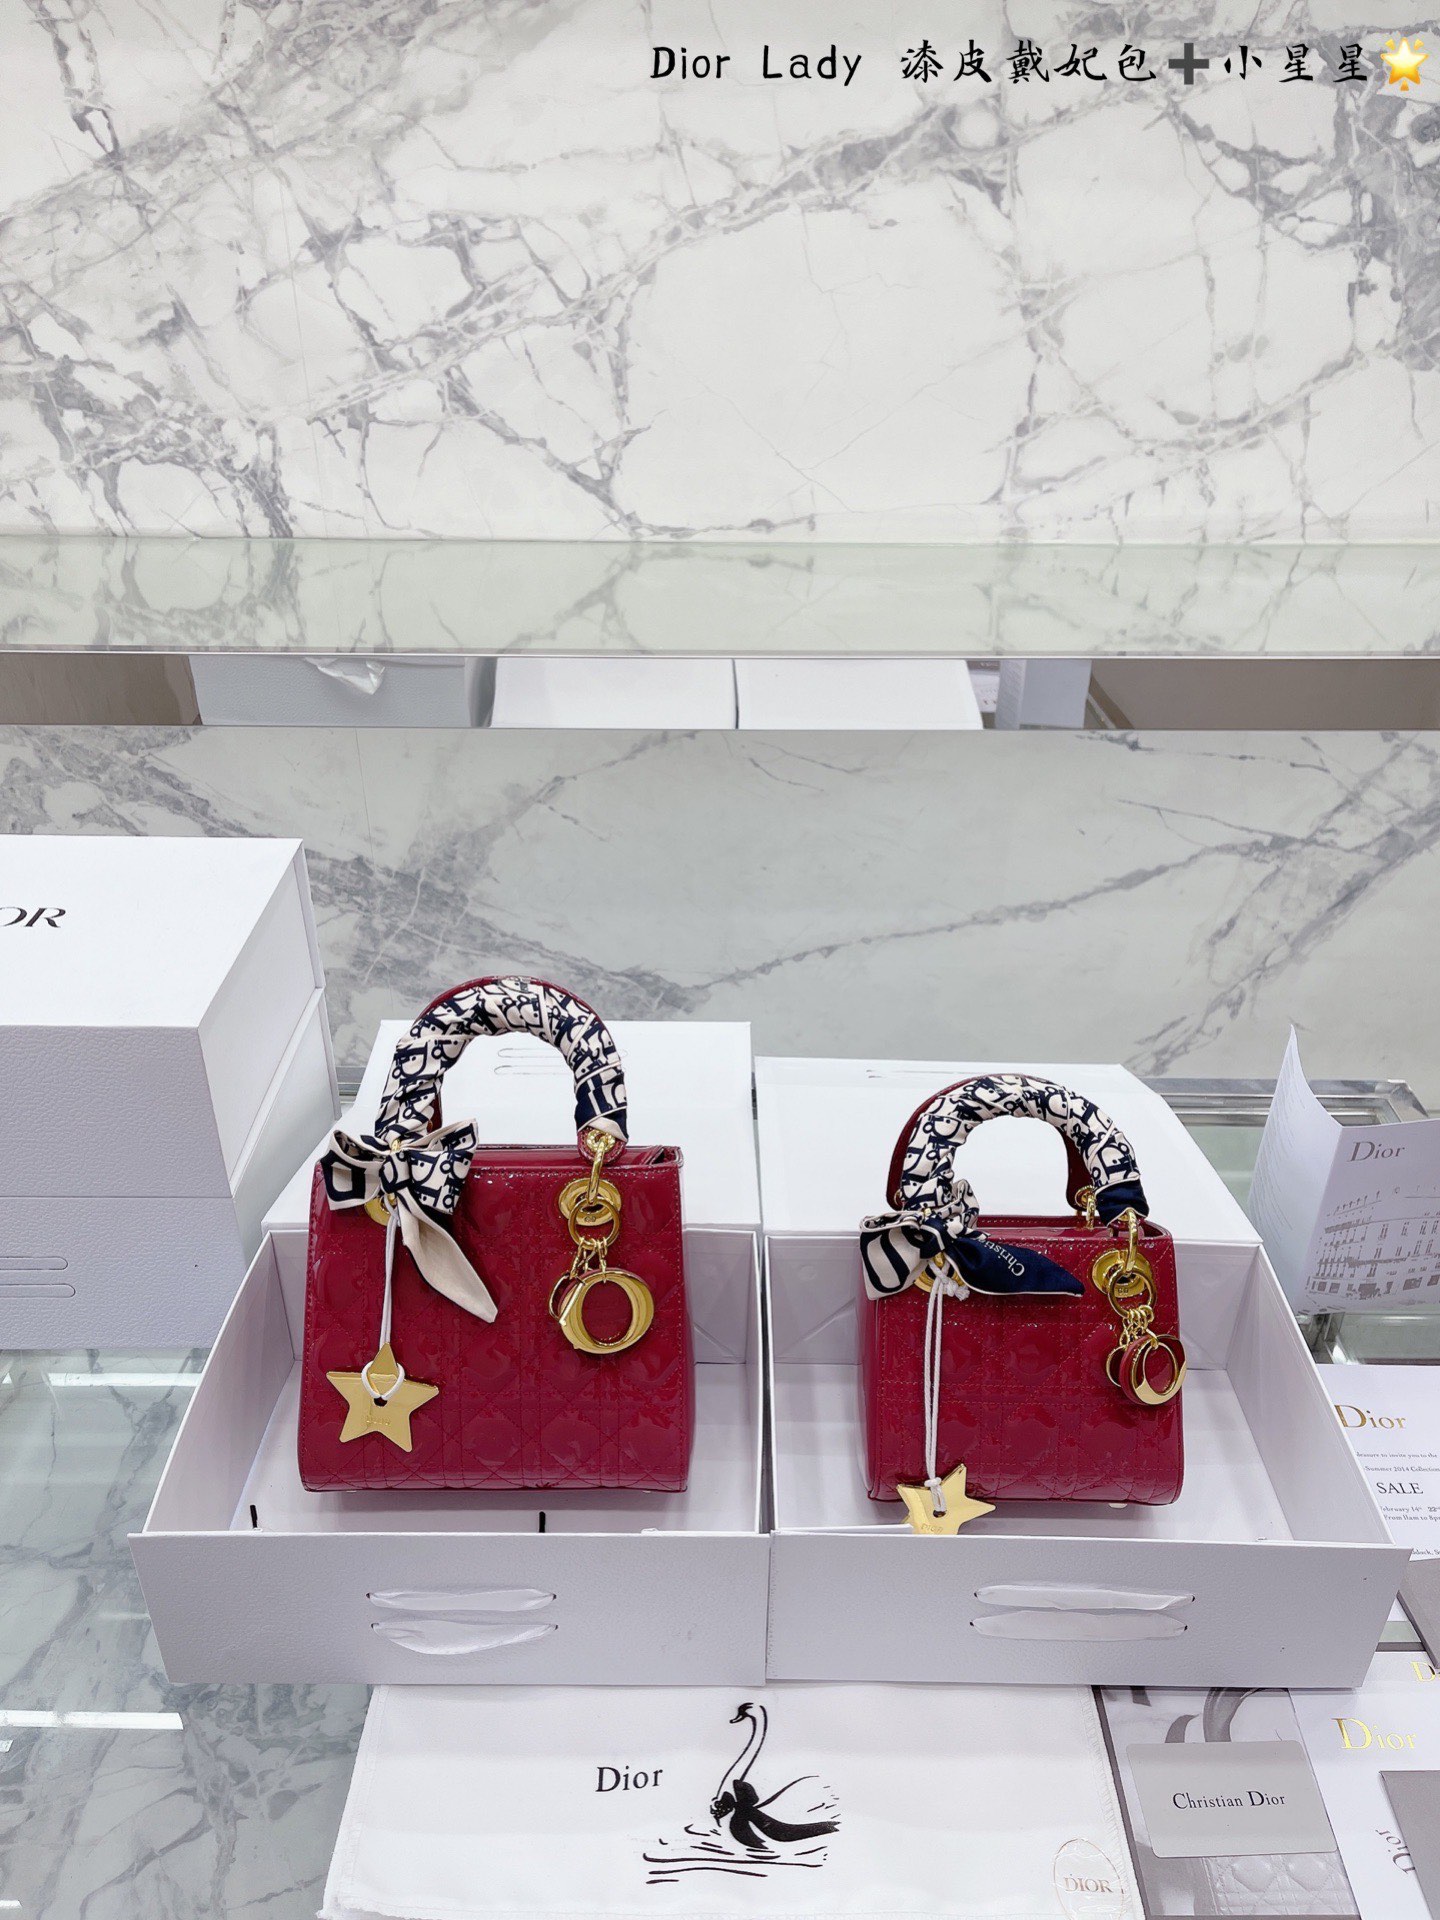 Dior little star handbag